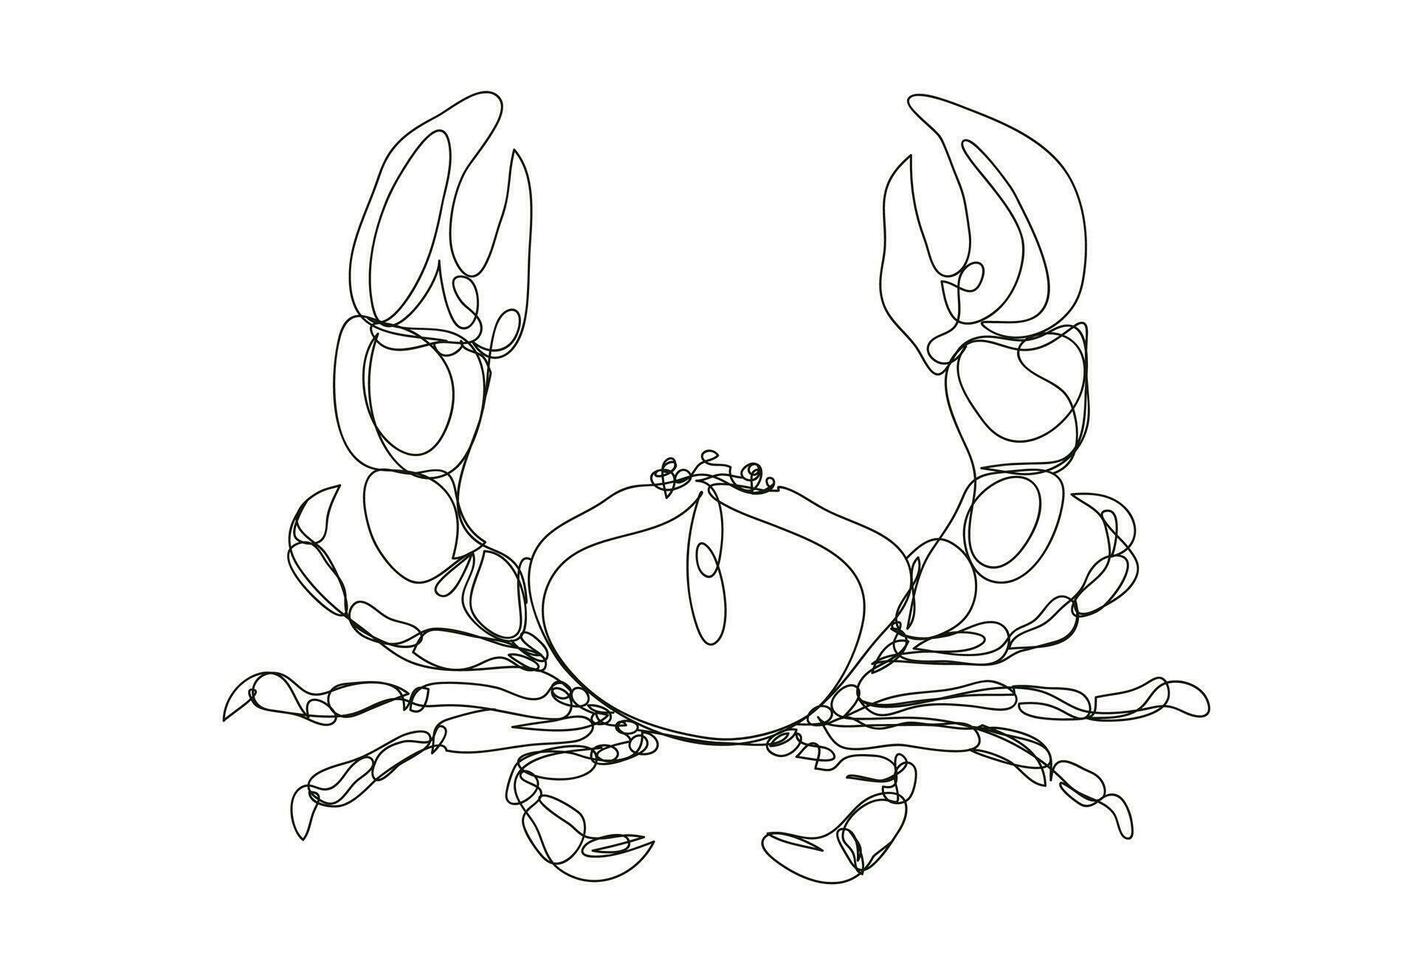 Crabe ligne dessin, continu ligne art, vecteur illustration